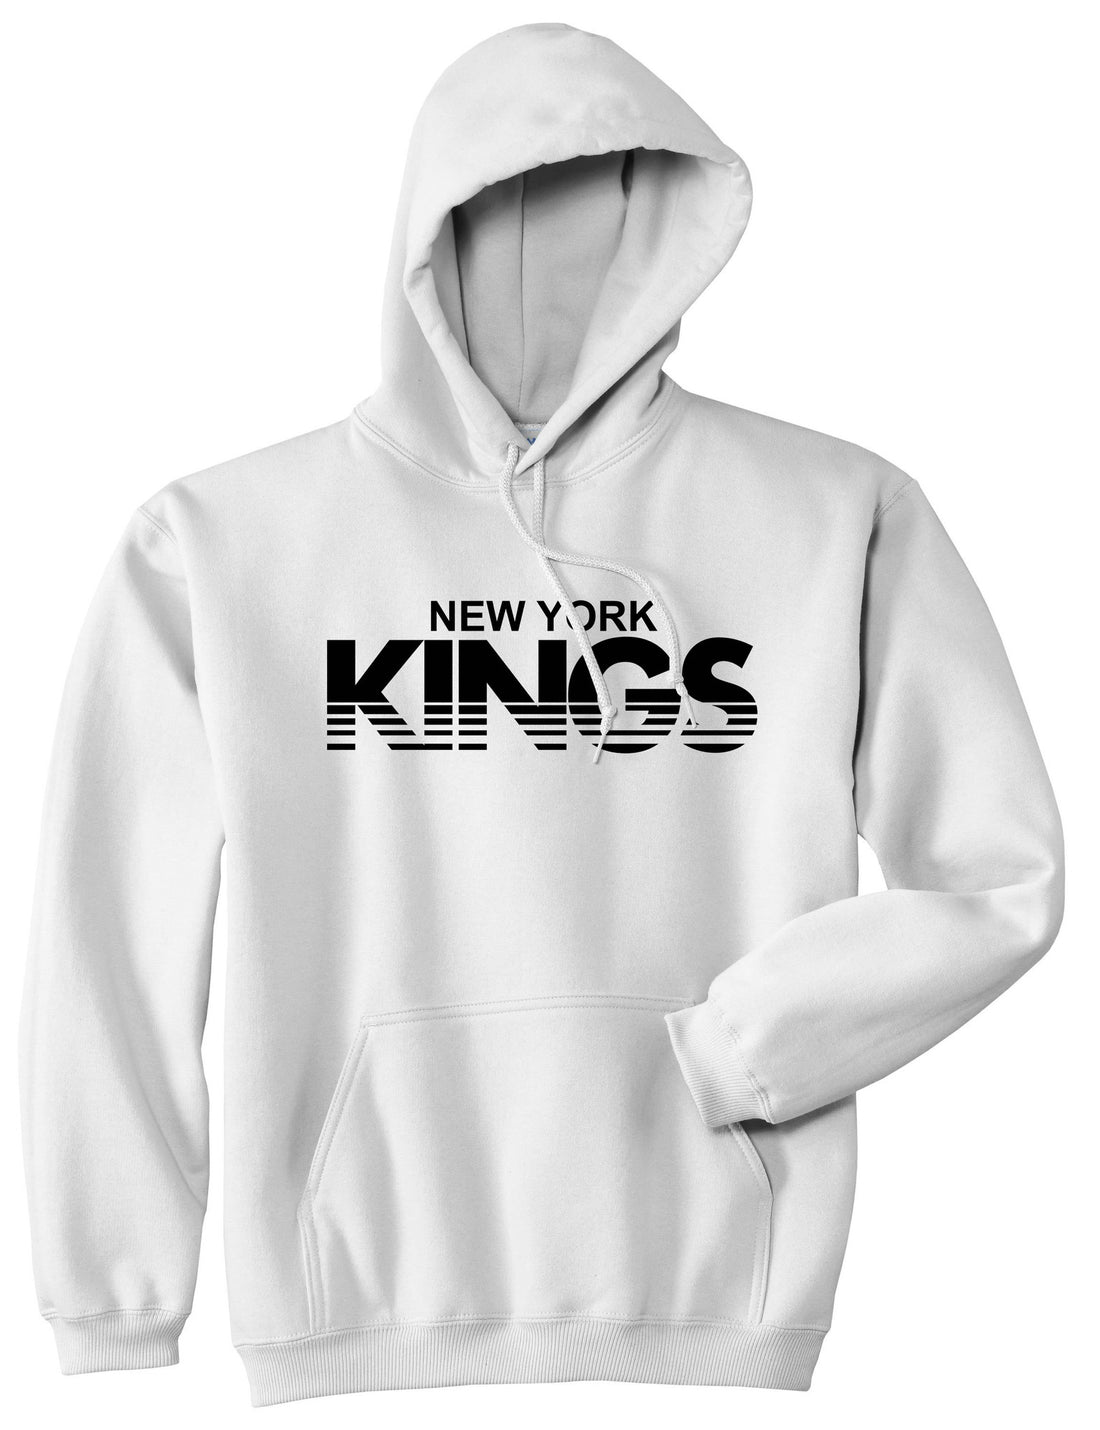 New York Kings Racing Style Boys Kids Pullover Hoodie Hoody in White by Kings Of NY